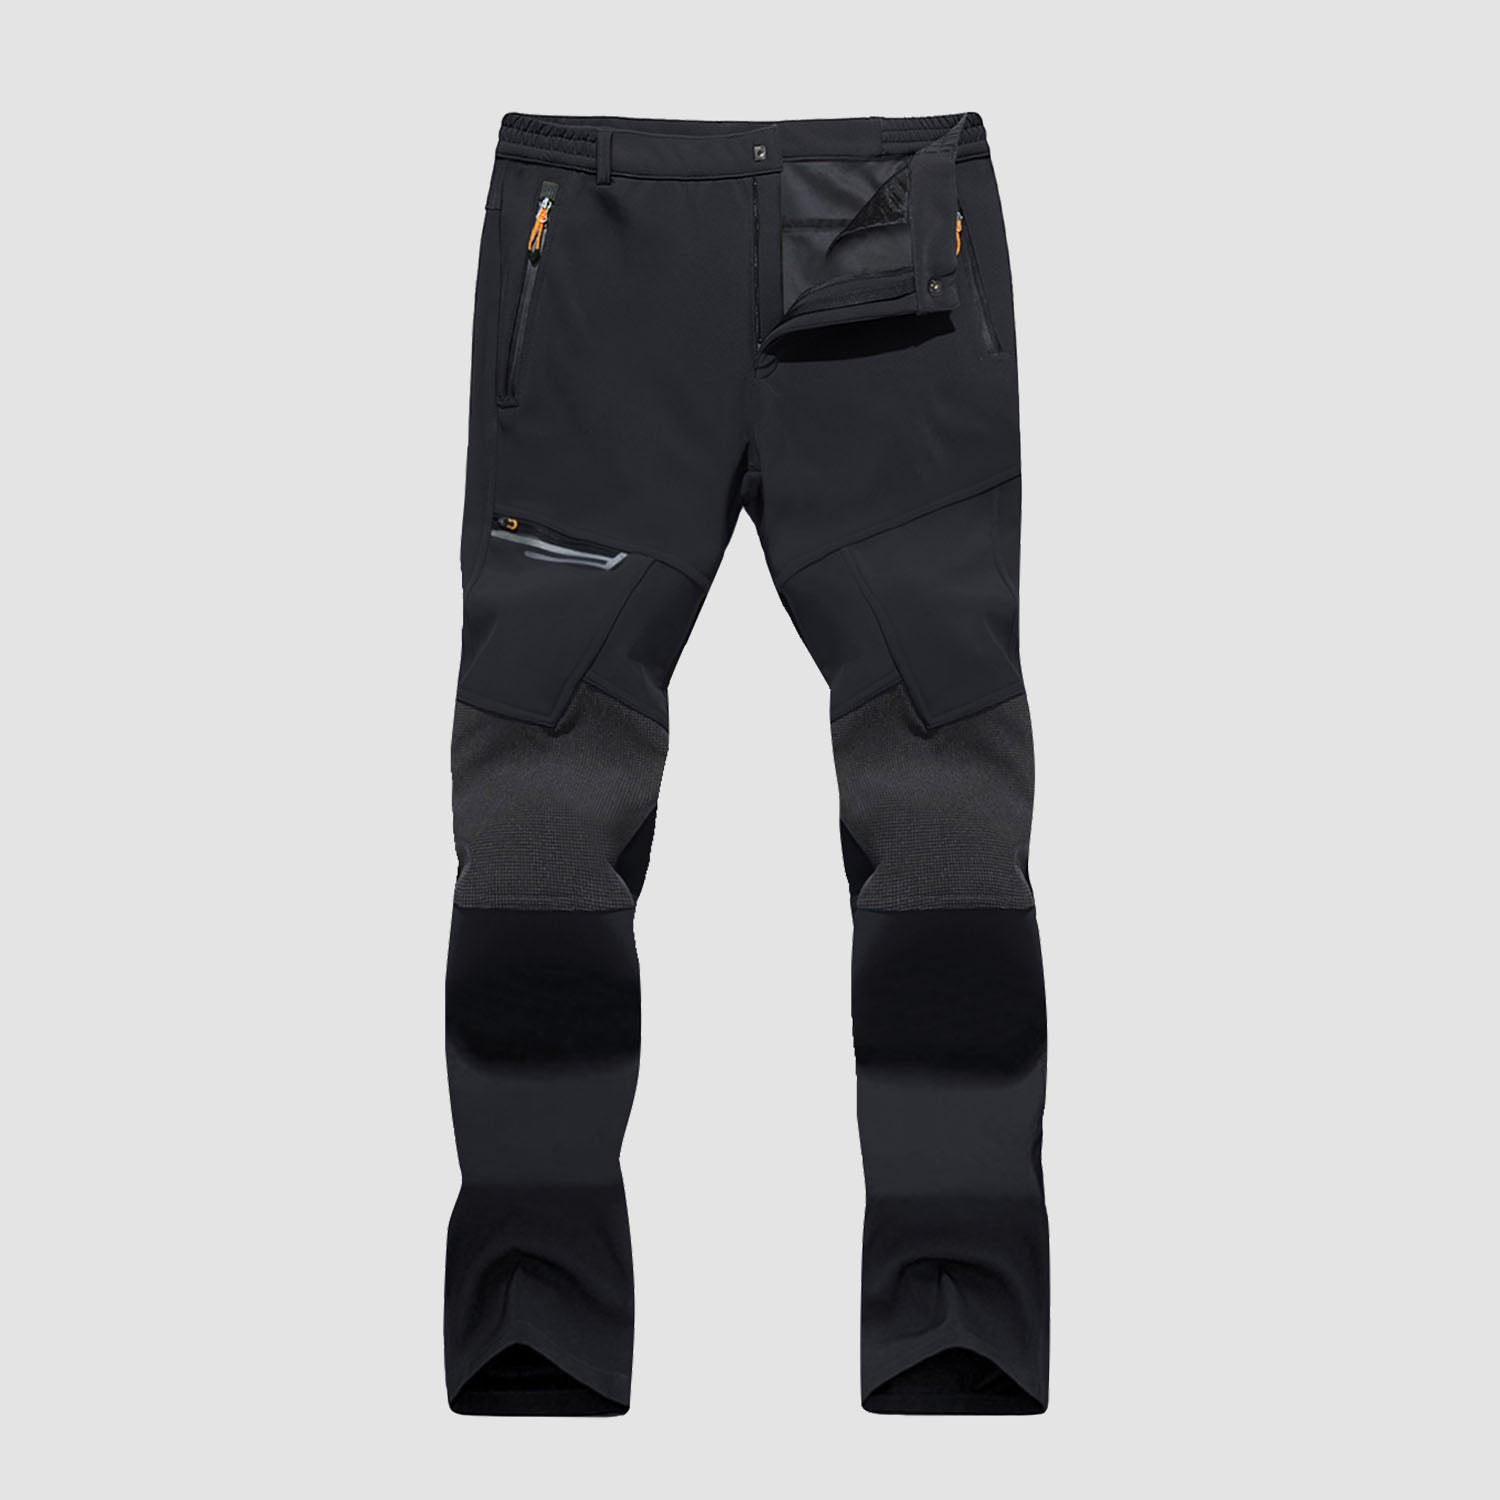 Mens Waterproof Tactical Pants With Pockets For Outdoor Trekking